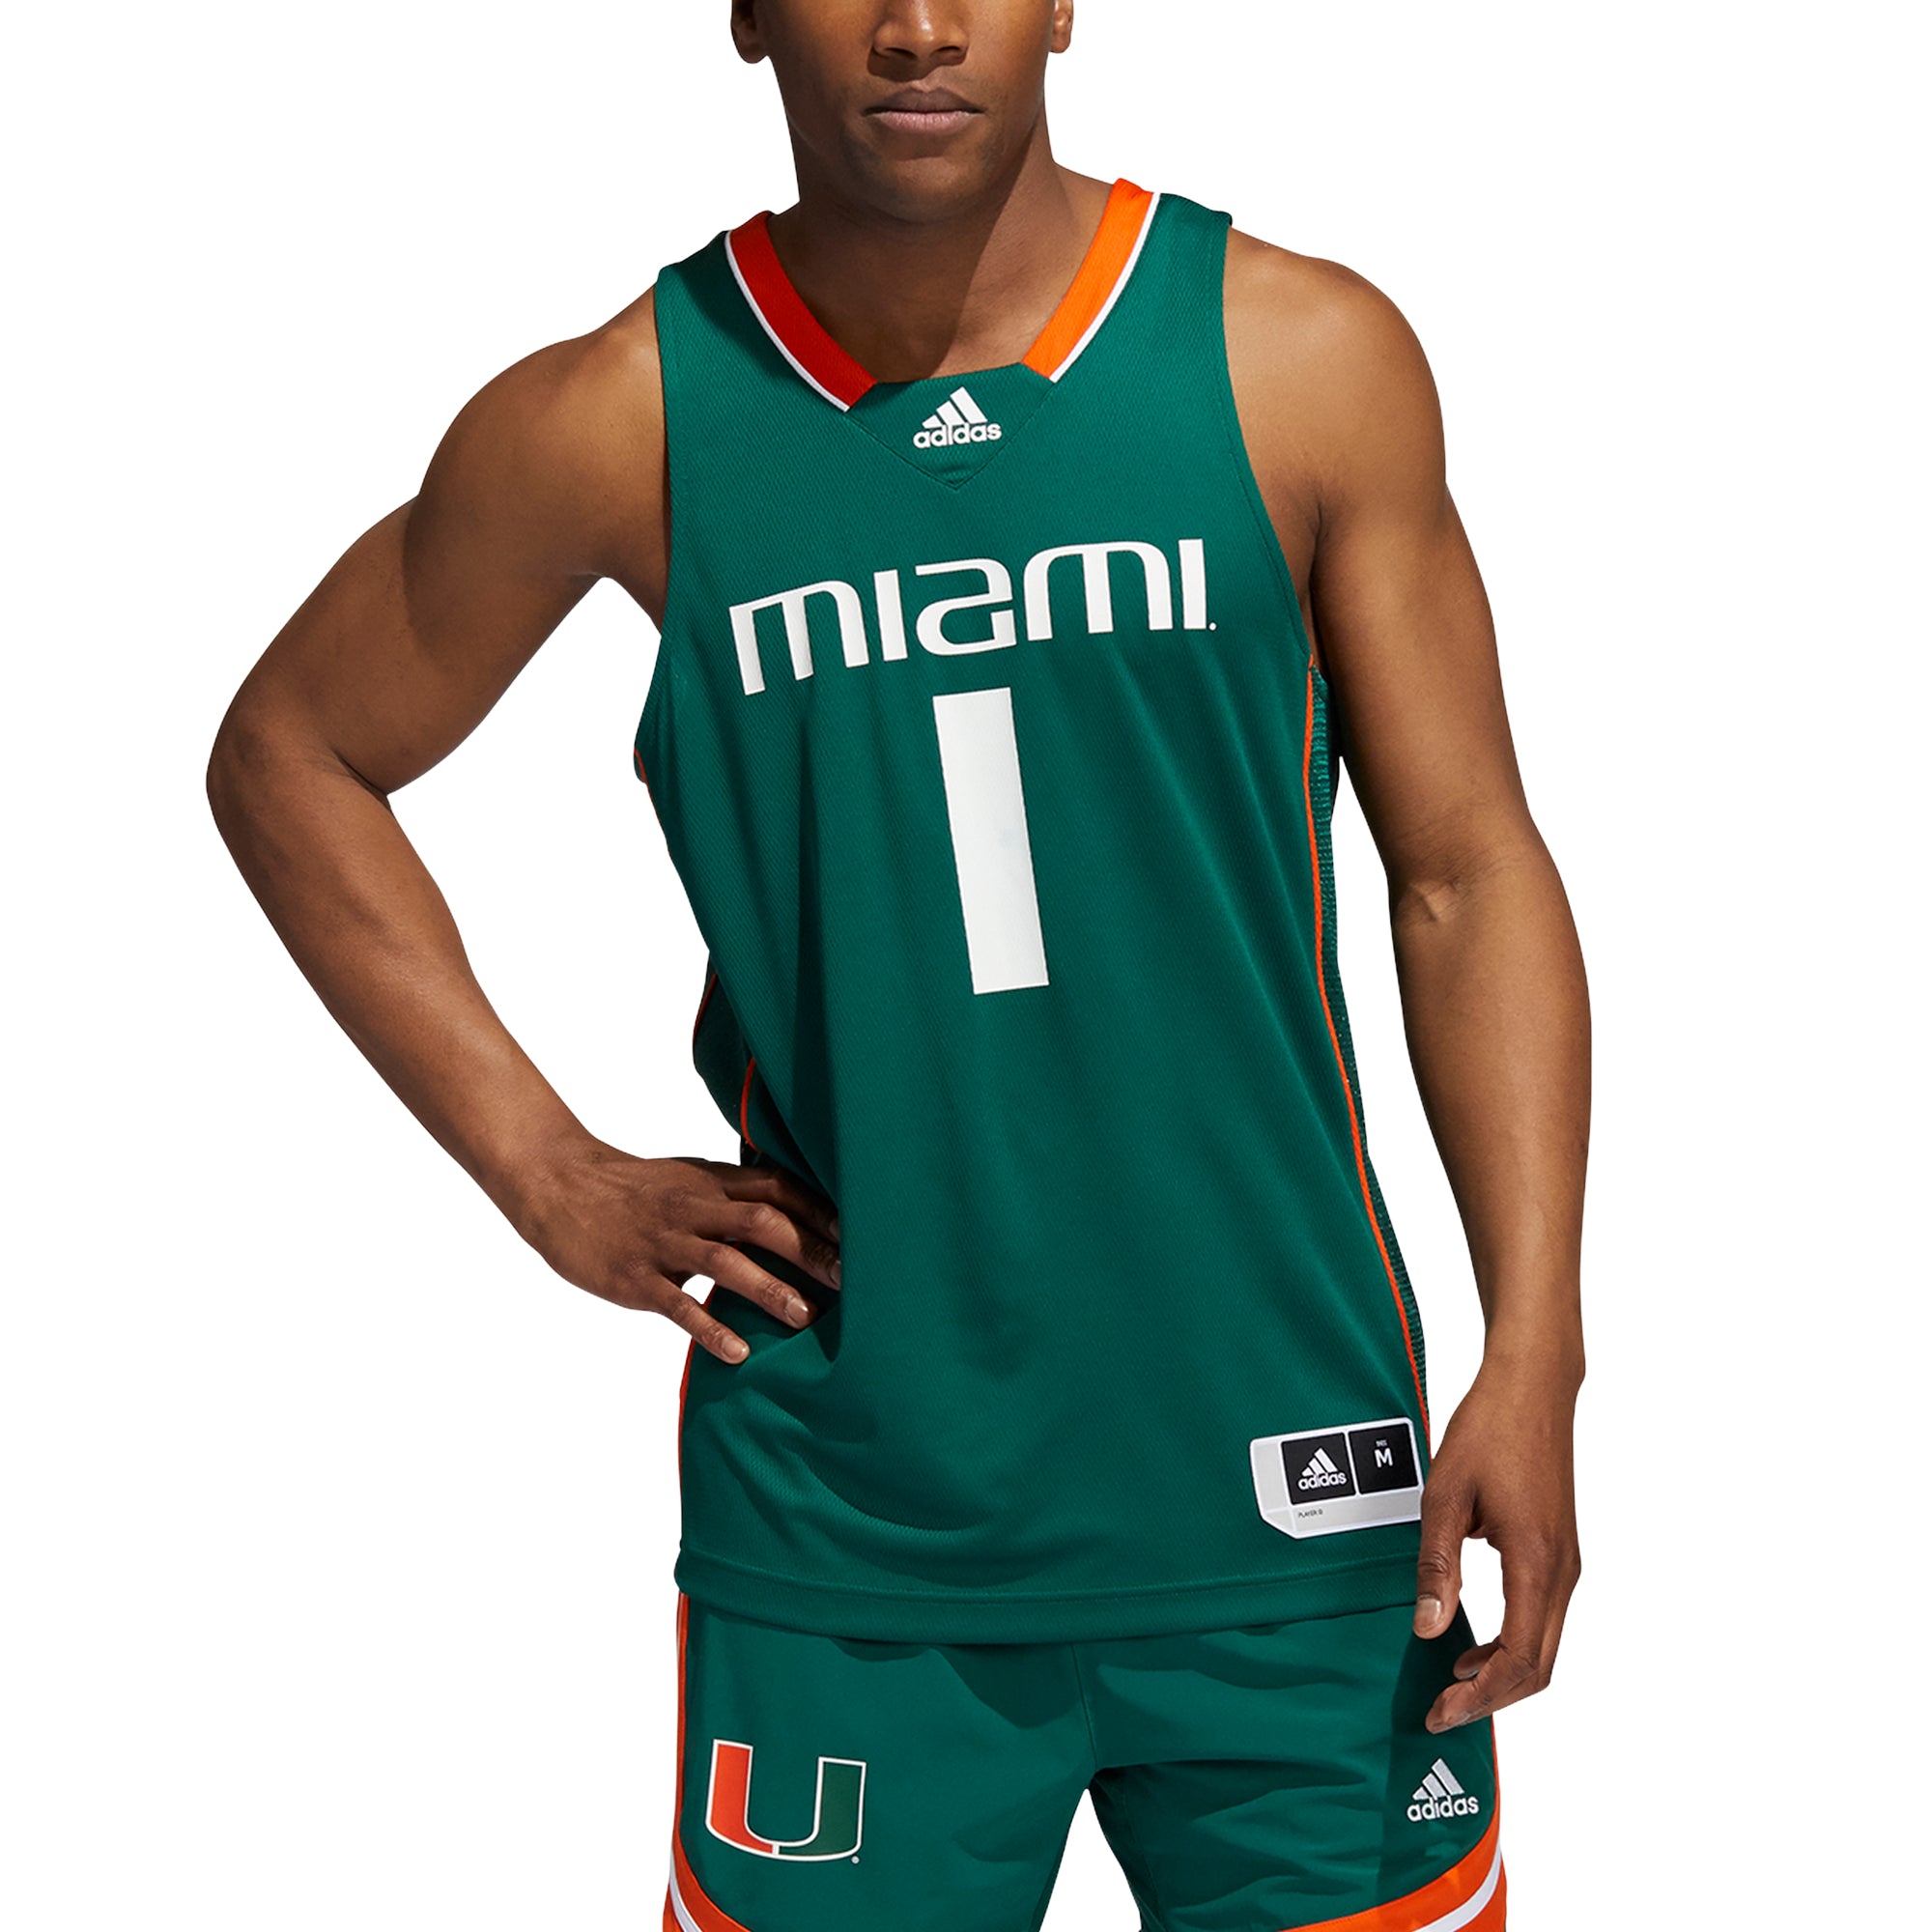 Miami Hurricanes adidas Swingman Basketball Jersey - Green